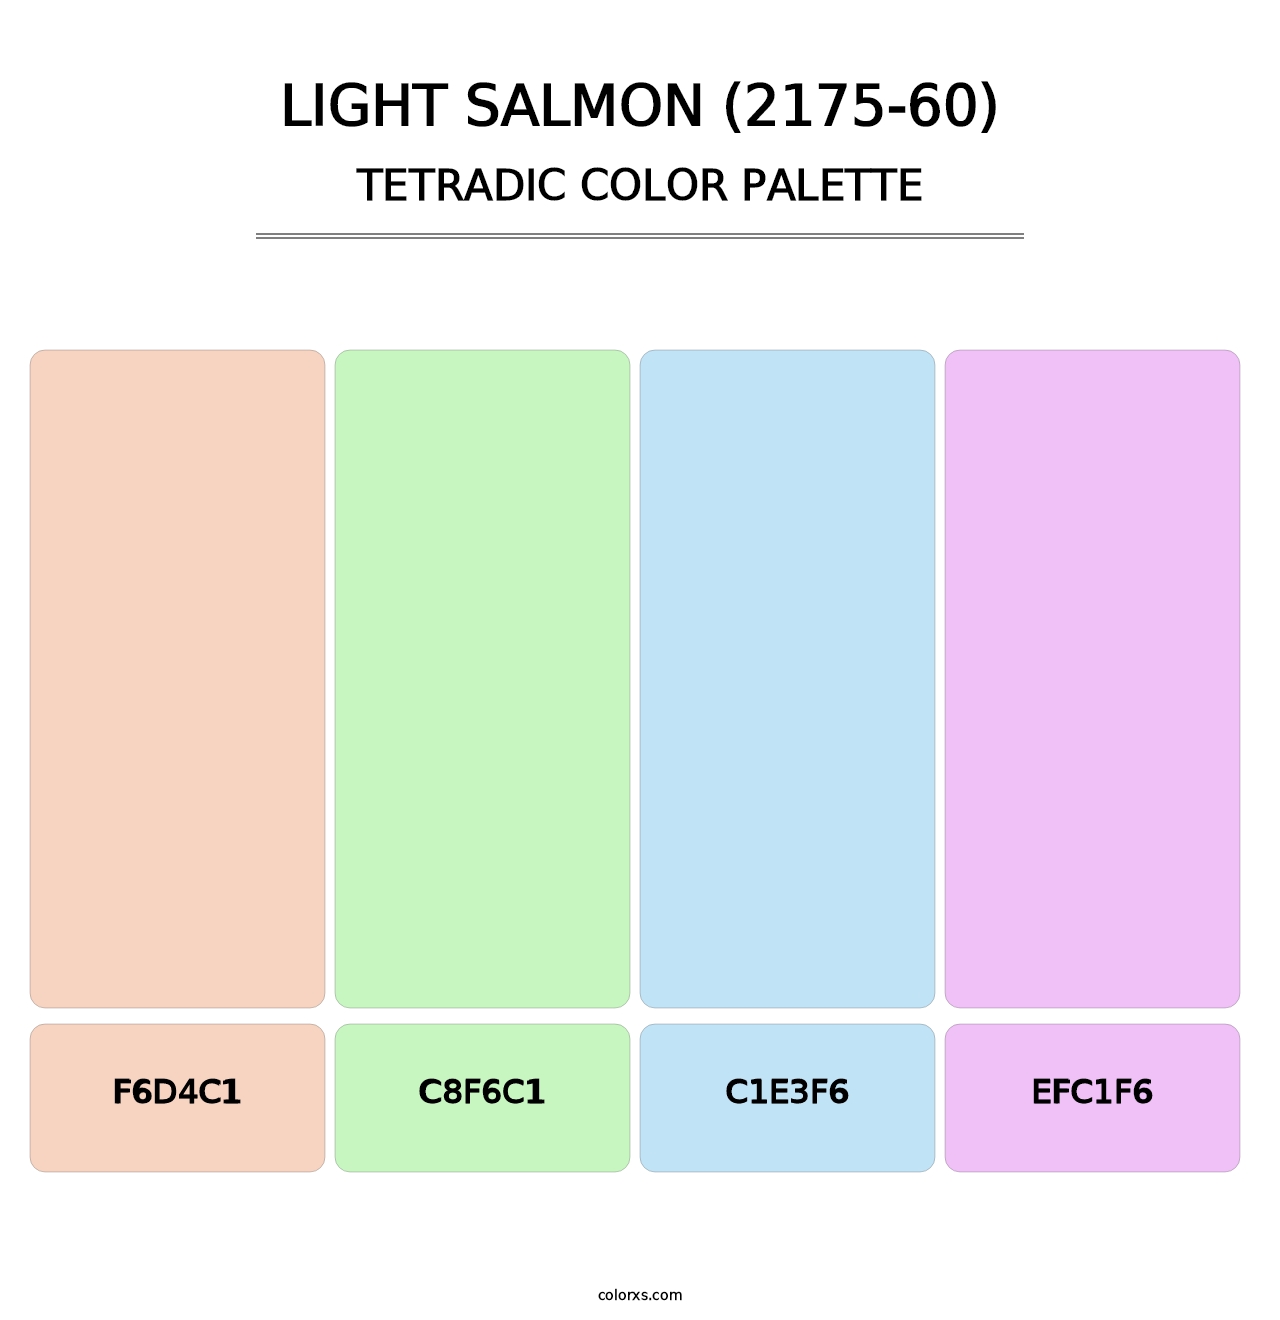 Light Salmon (2175-60) - Tetradic Color Palette